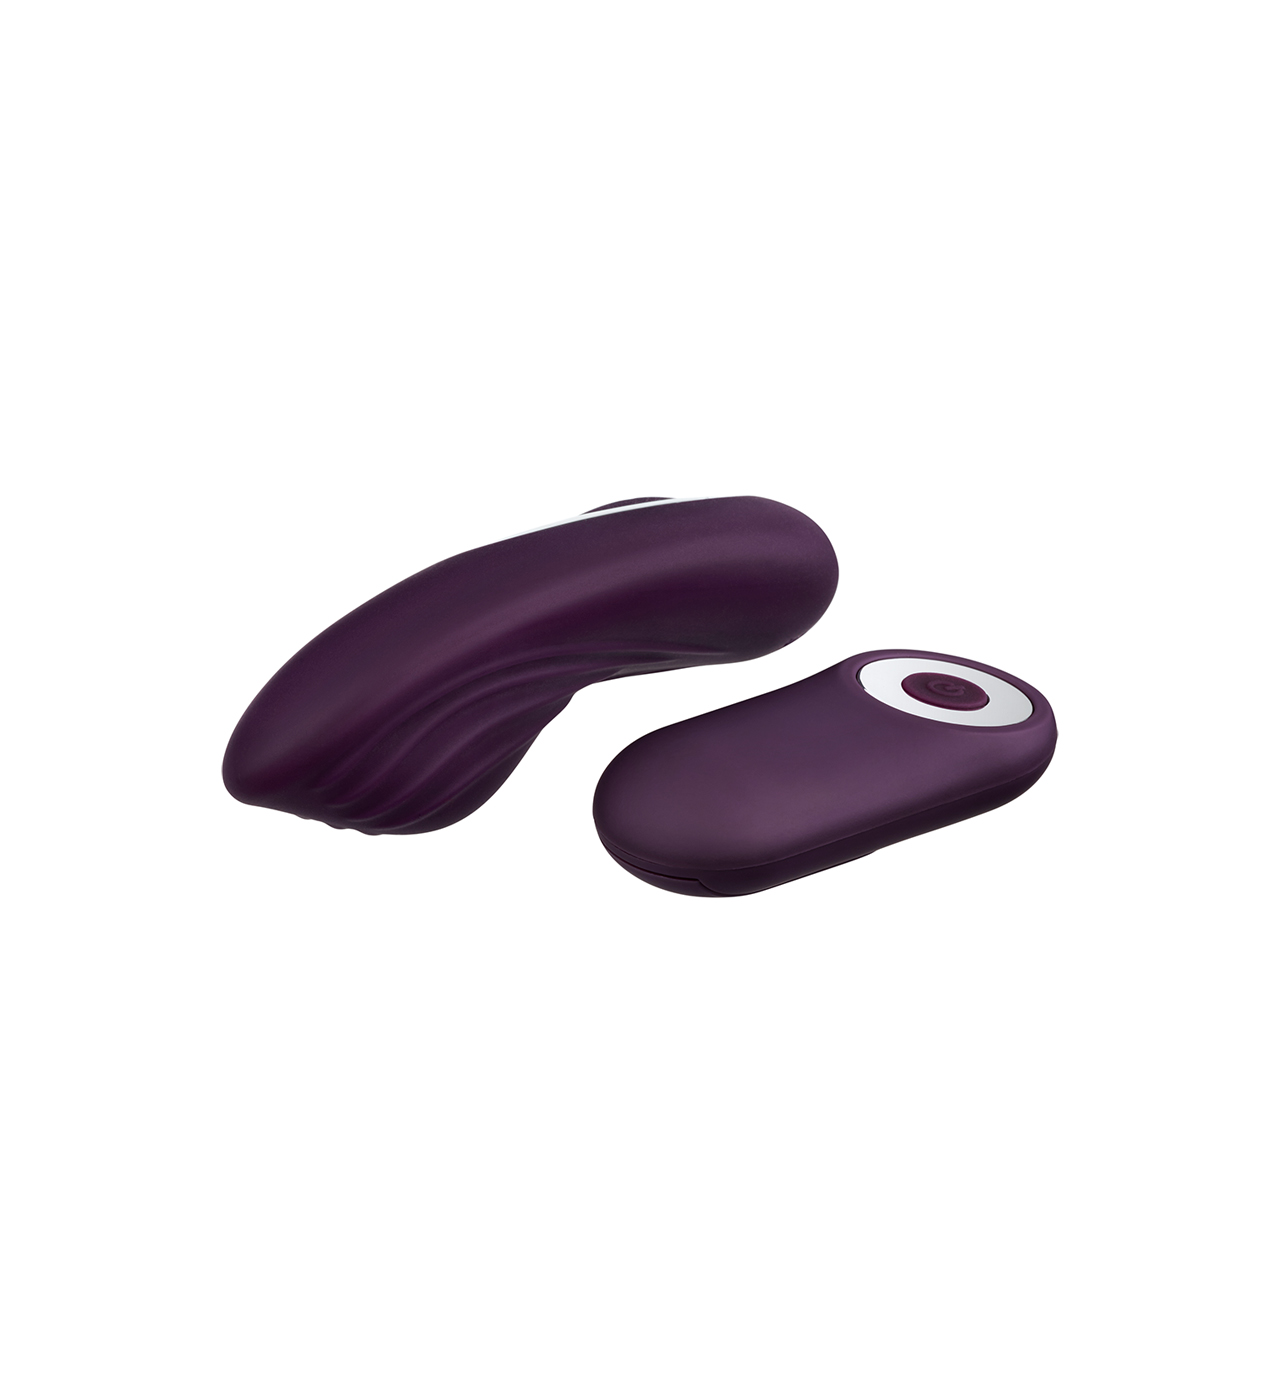 Keep Me Close - Discreet panty vibrator with remote control  - RFSU 